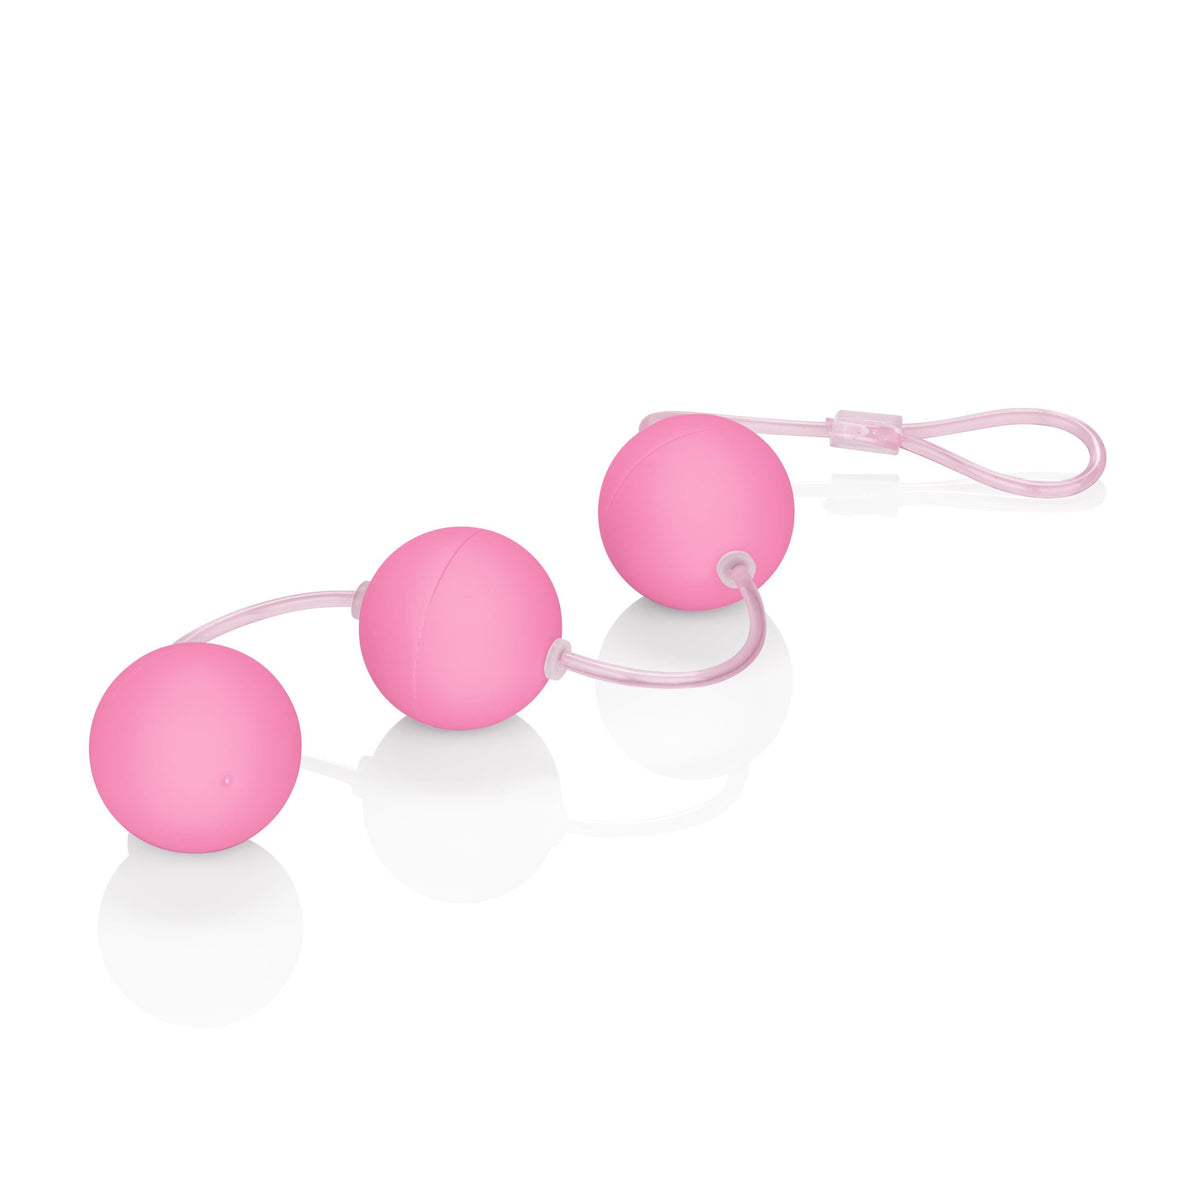 California Exotics - First Time Triple Love Kegel Balls (Pink) CE1577 CherryAffairs